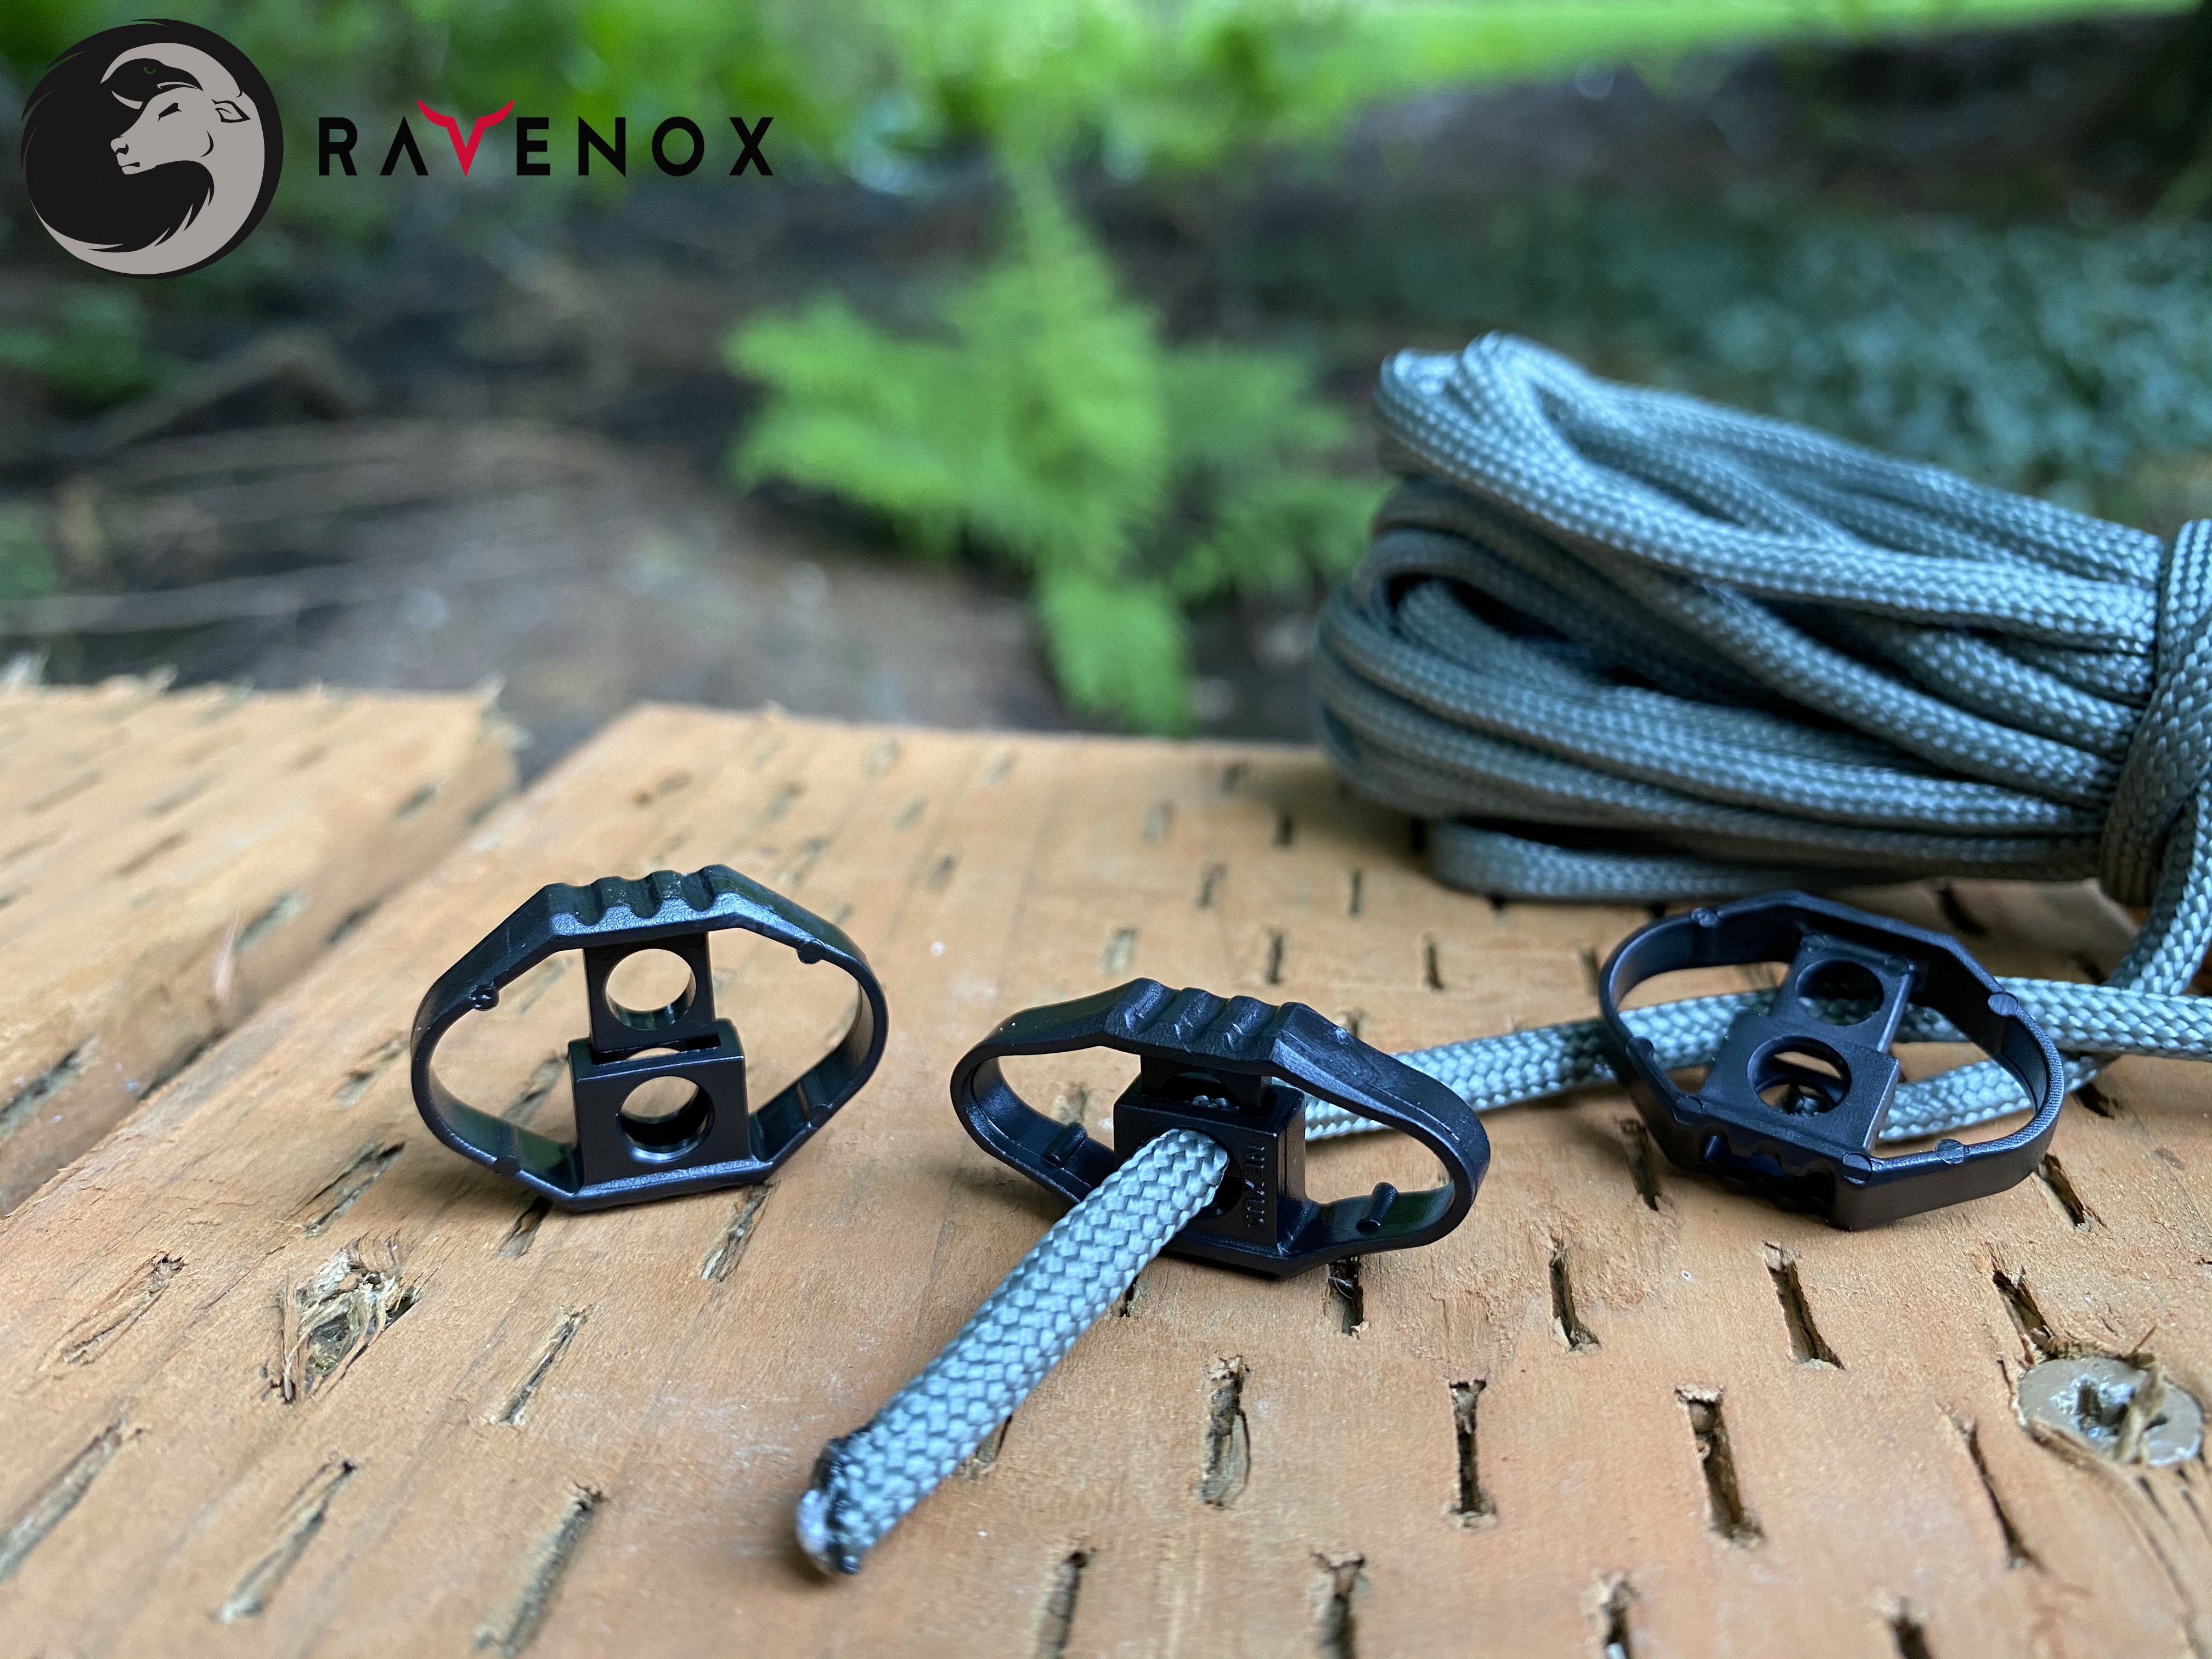 Ravenox's Versatile Ellipse Cord Locks